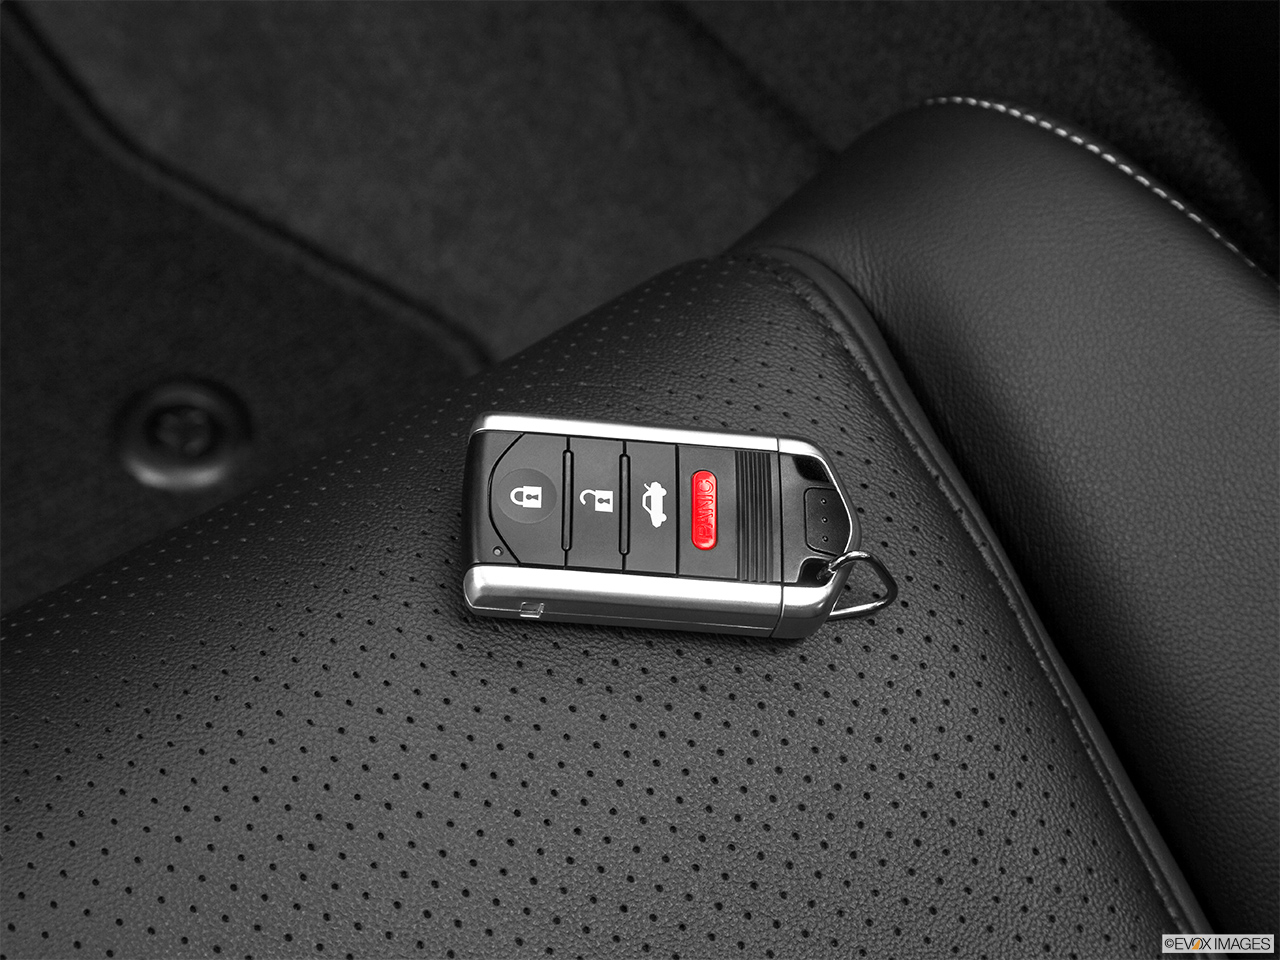 2013 Acura TL SH-AWD Key fob on driver's seat. 